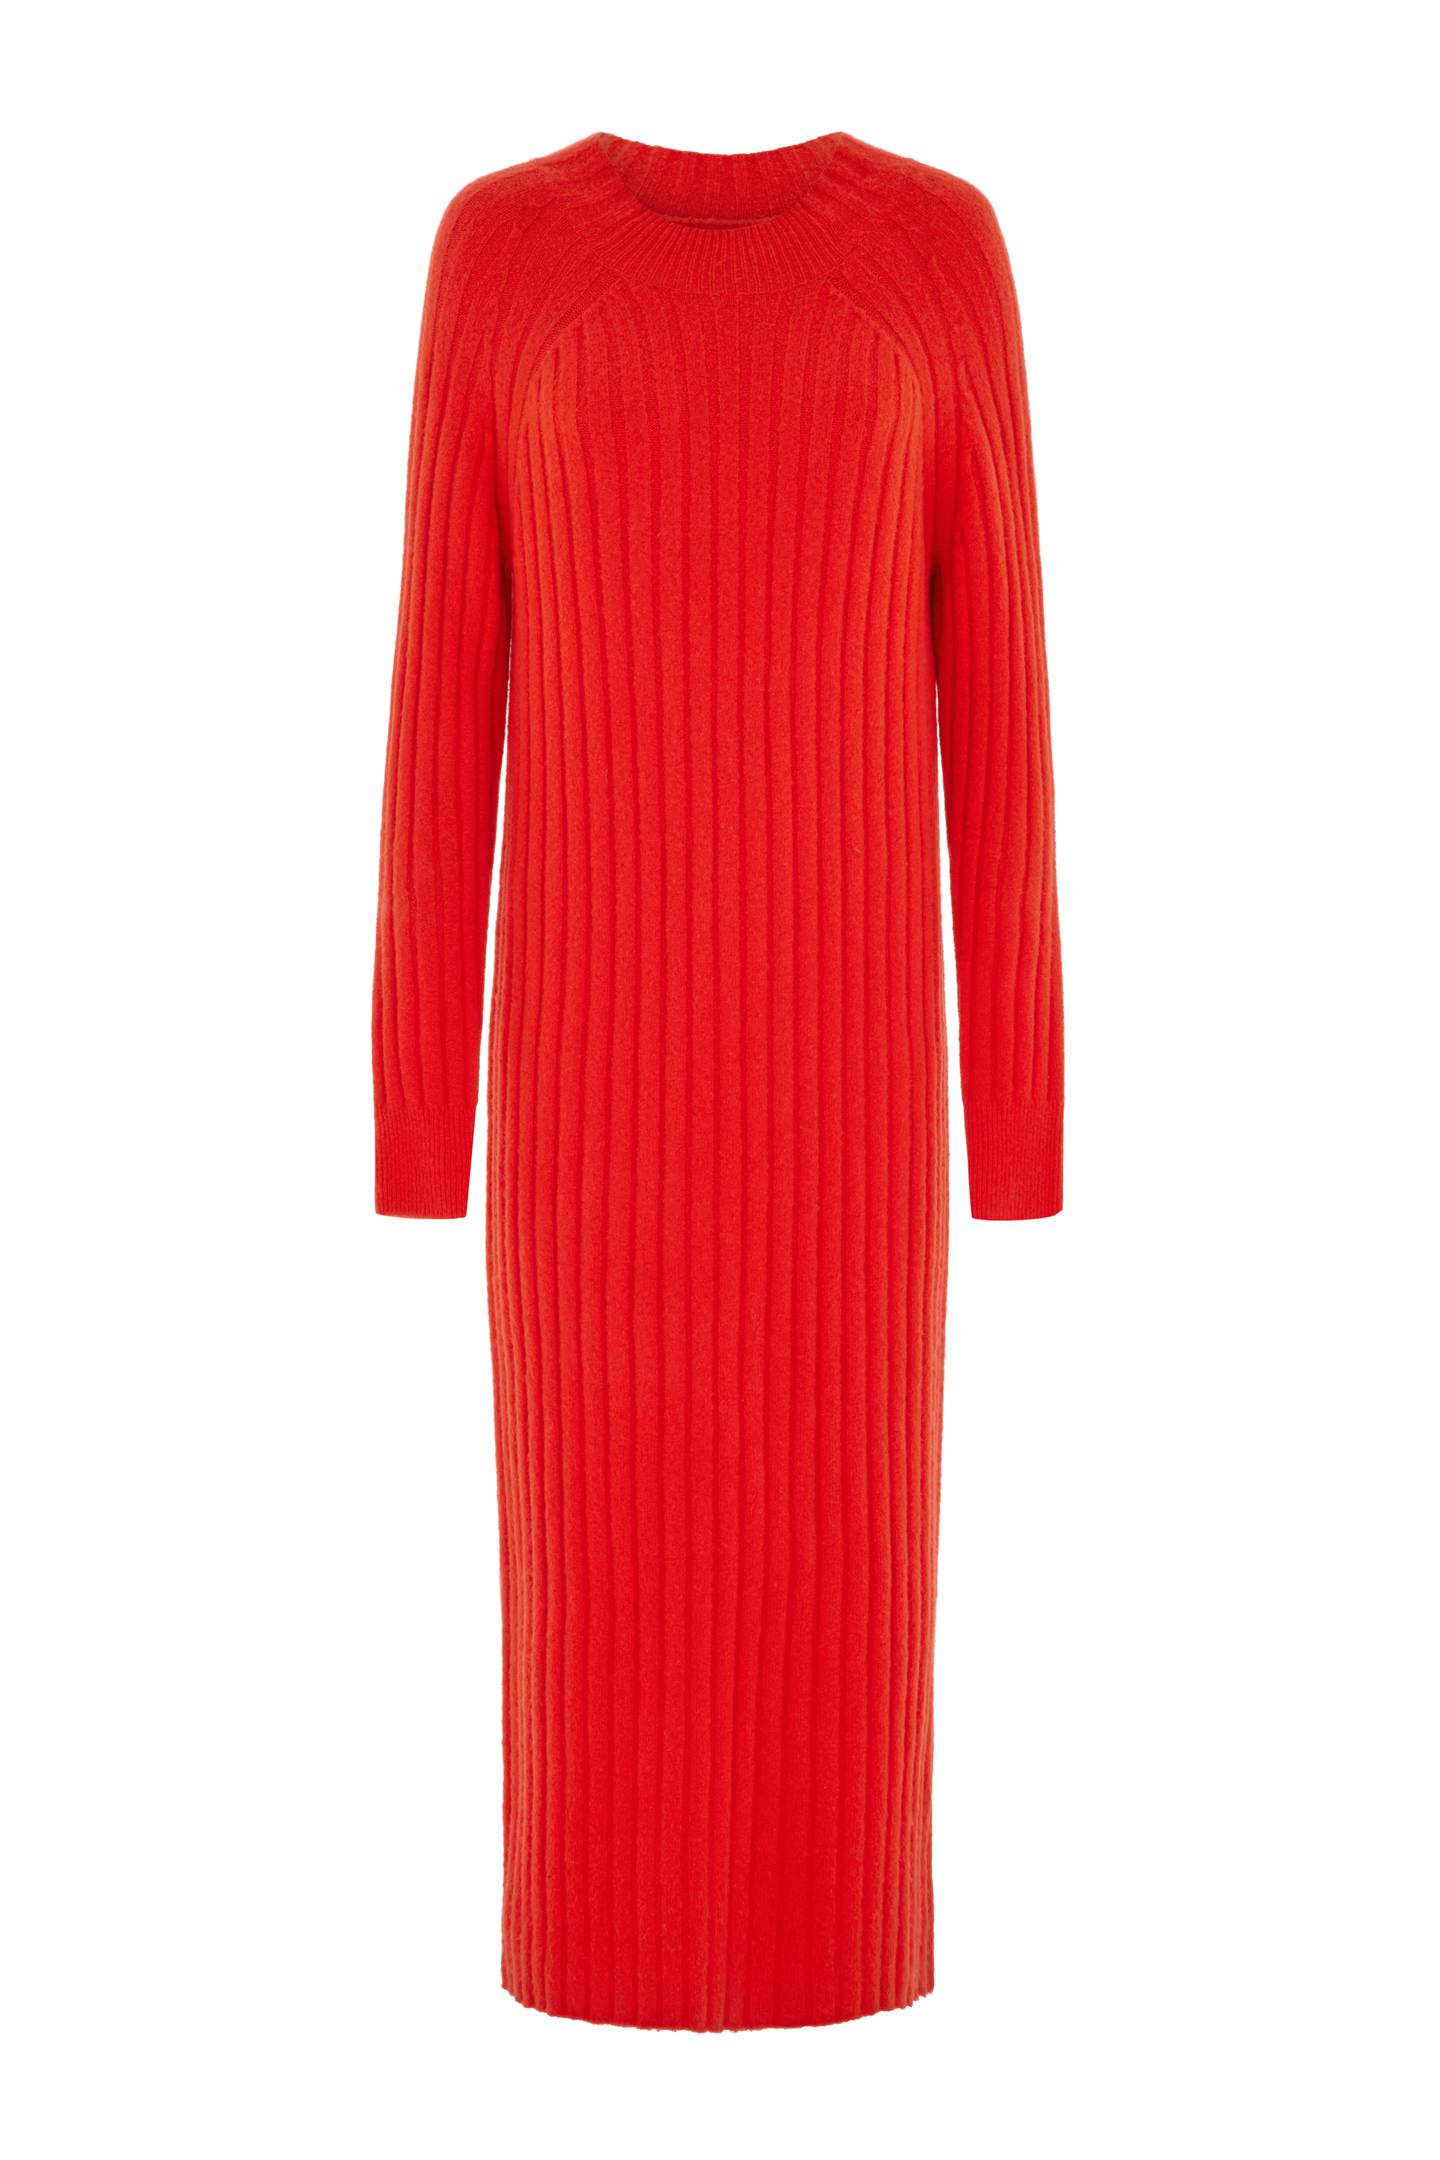 Midi knit dress, €169, Whistles